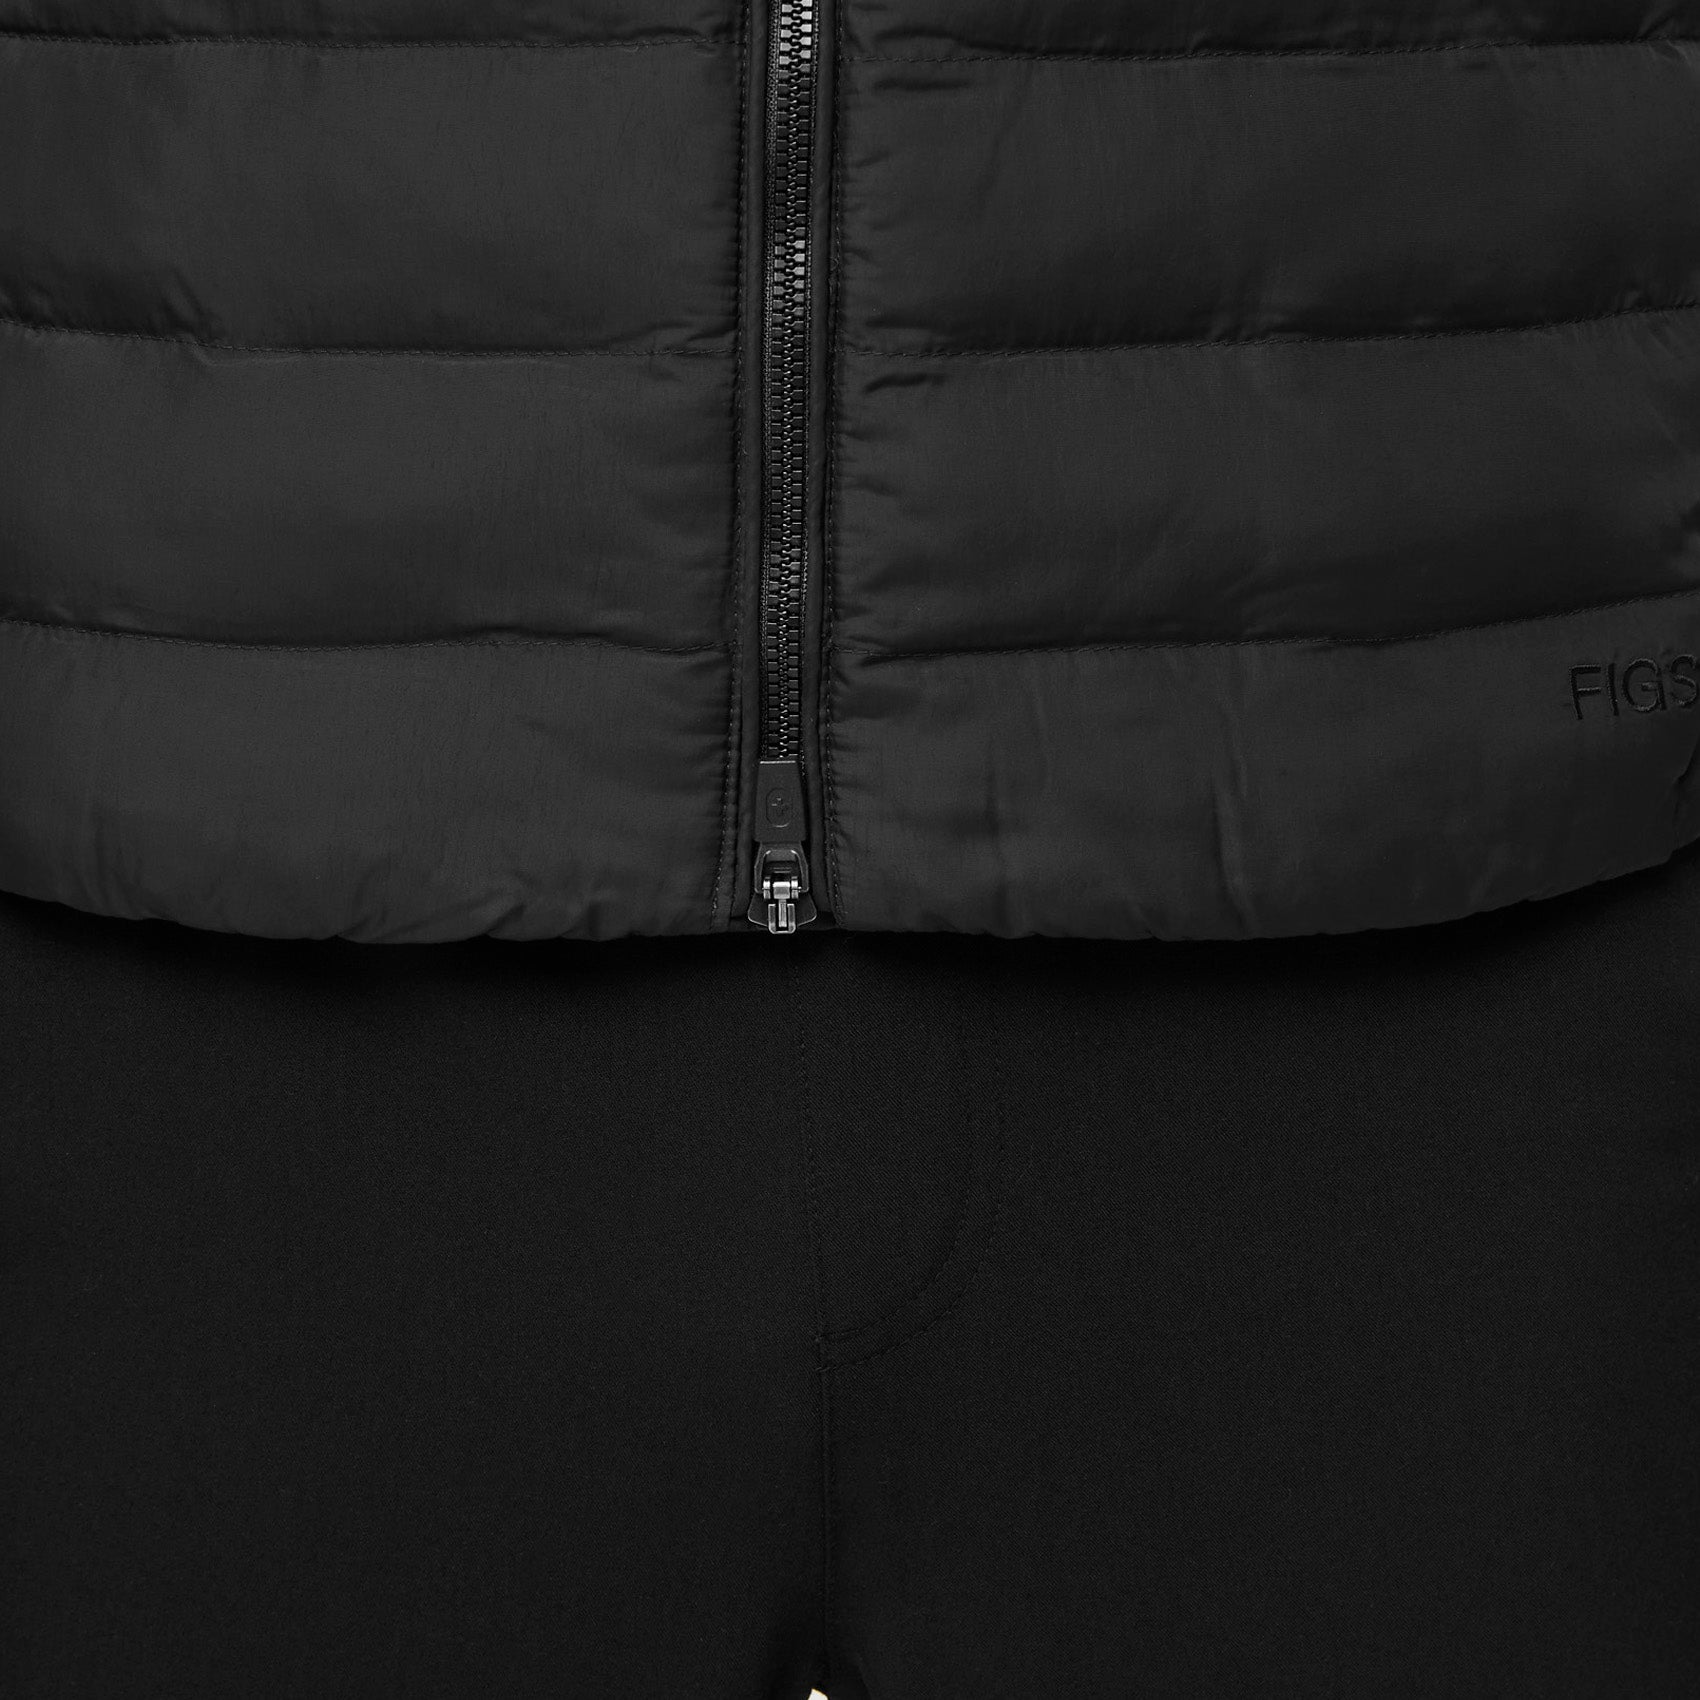 Figs Men’s On-Shift Packable Puffer Vest Black L